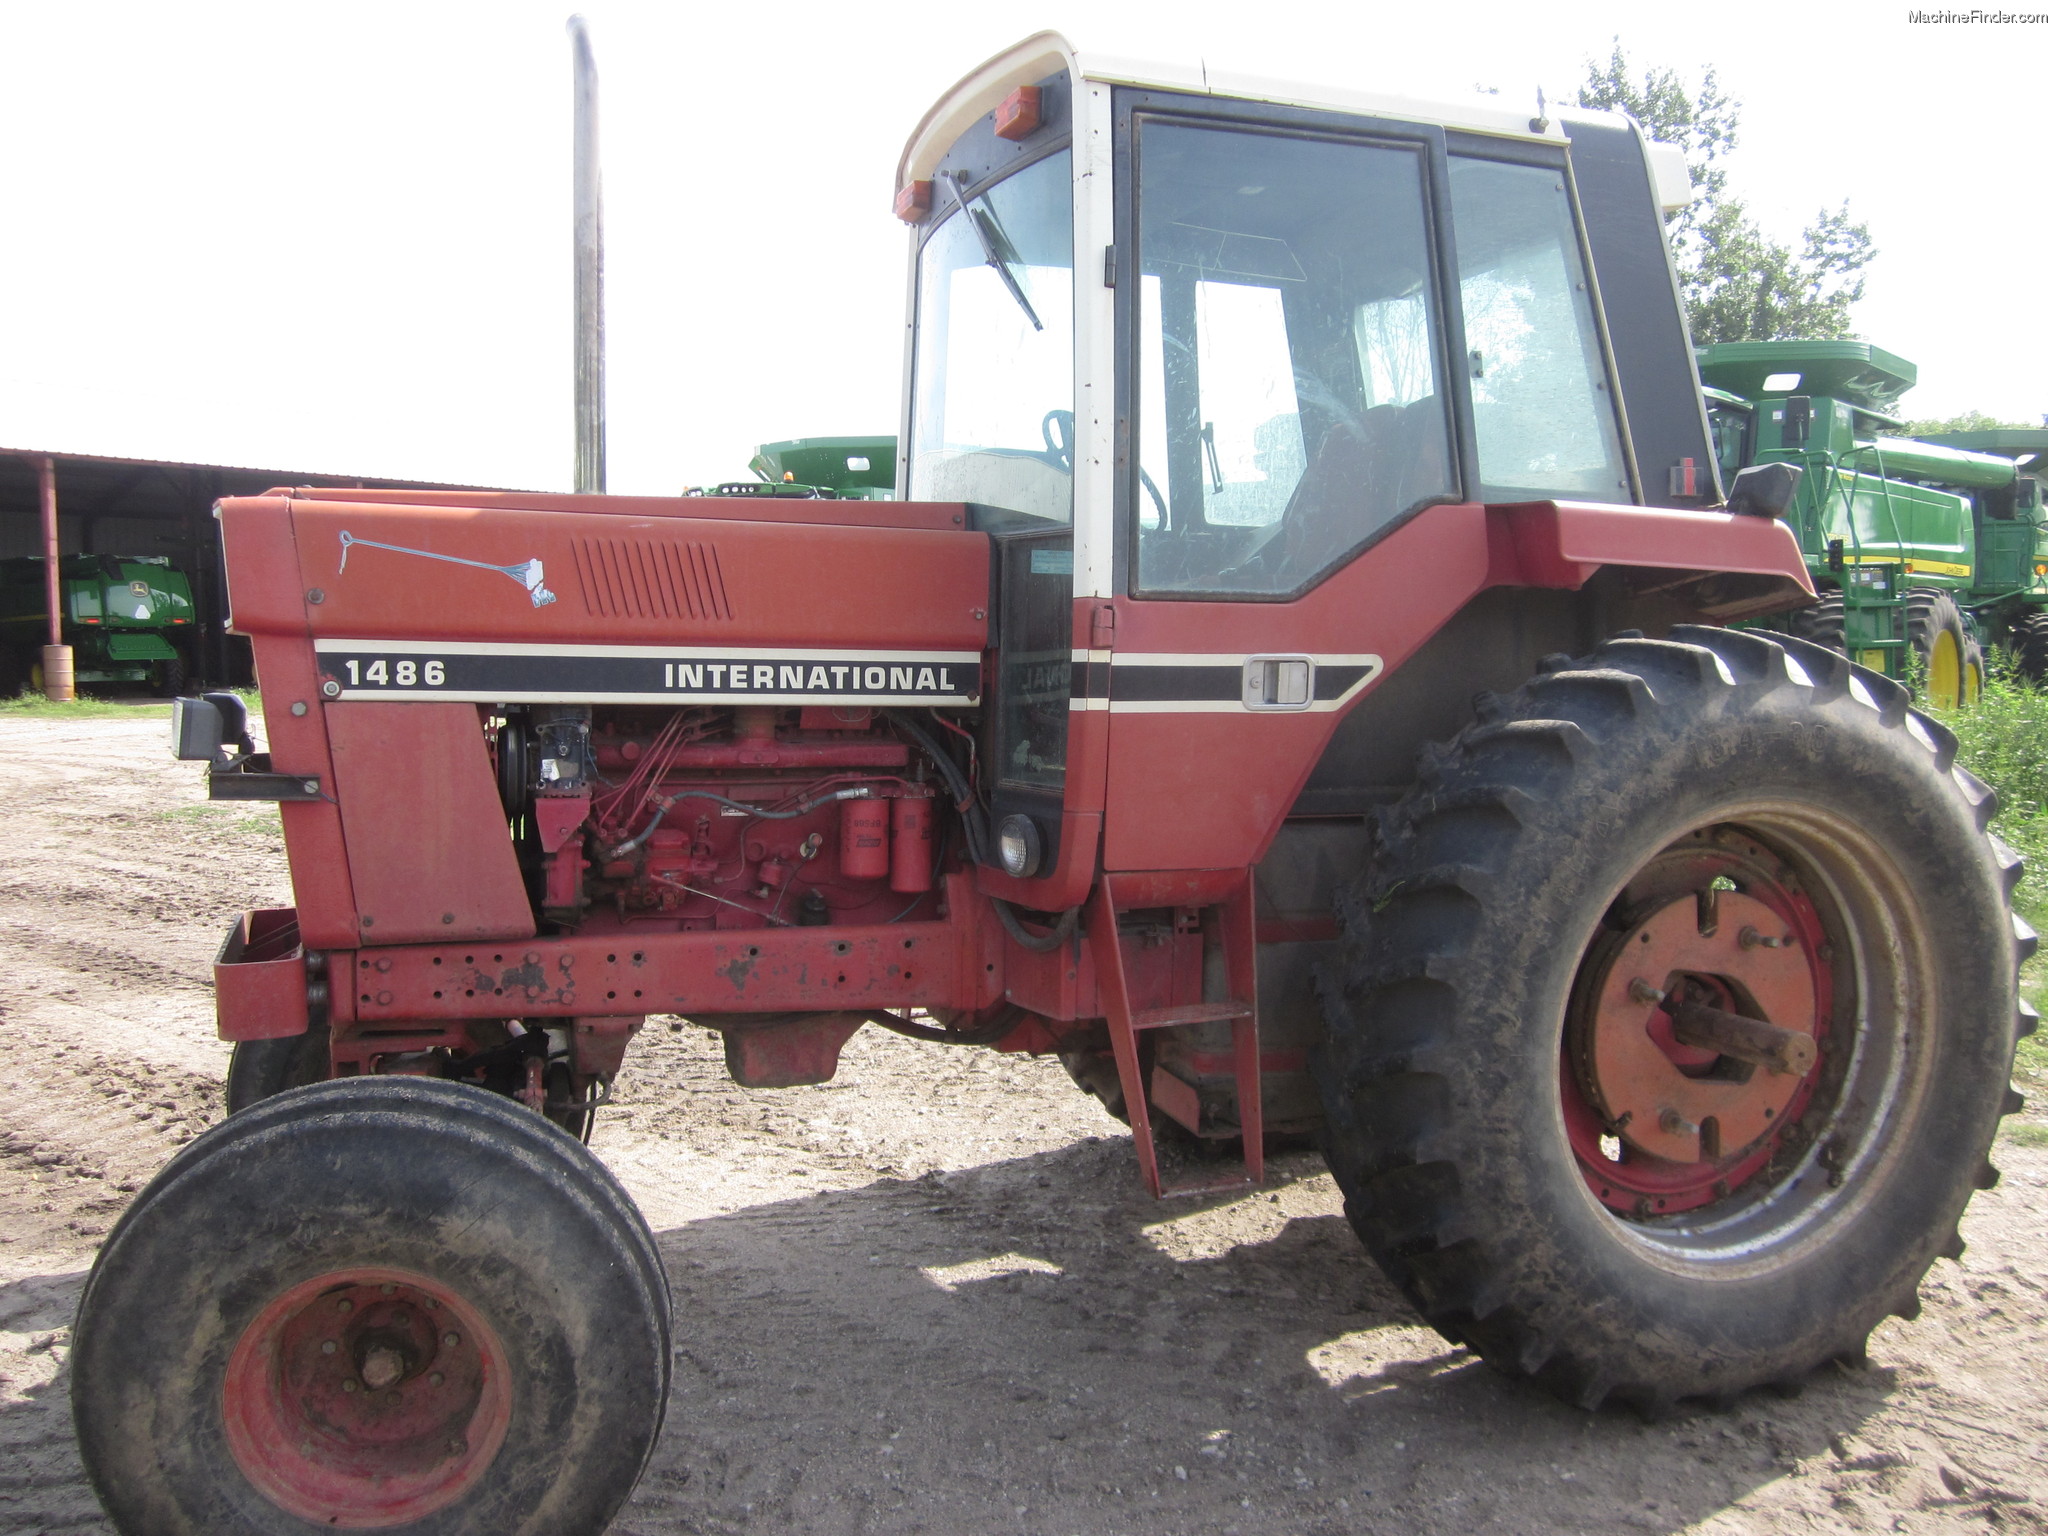 1979 International Harvester 1486 Tractors - Row Crop (+100hp) - John ...